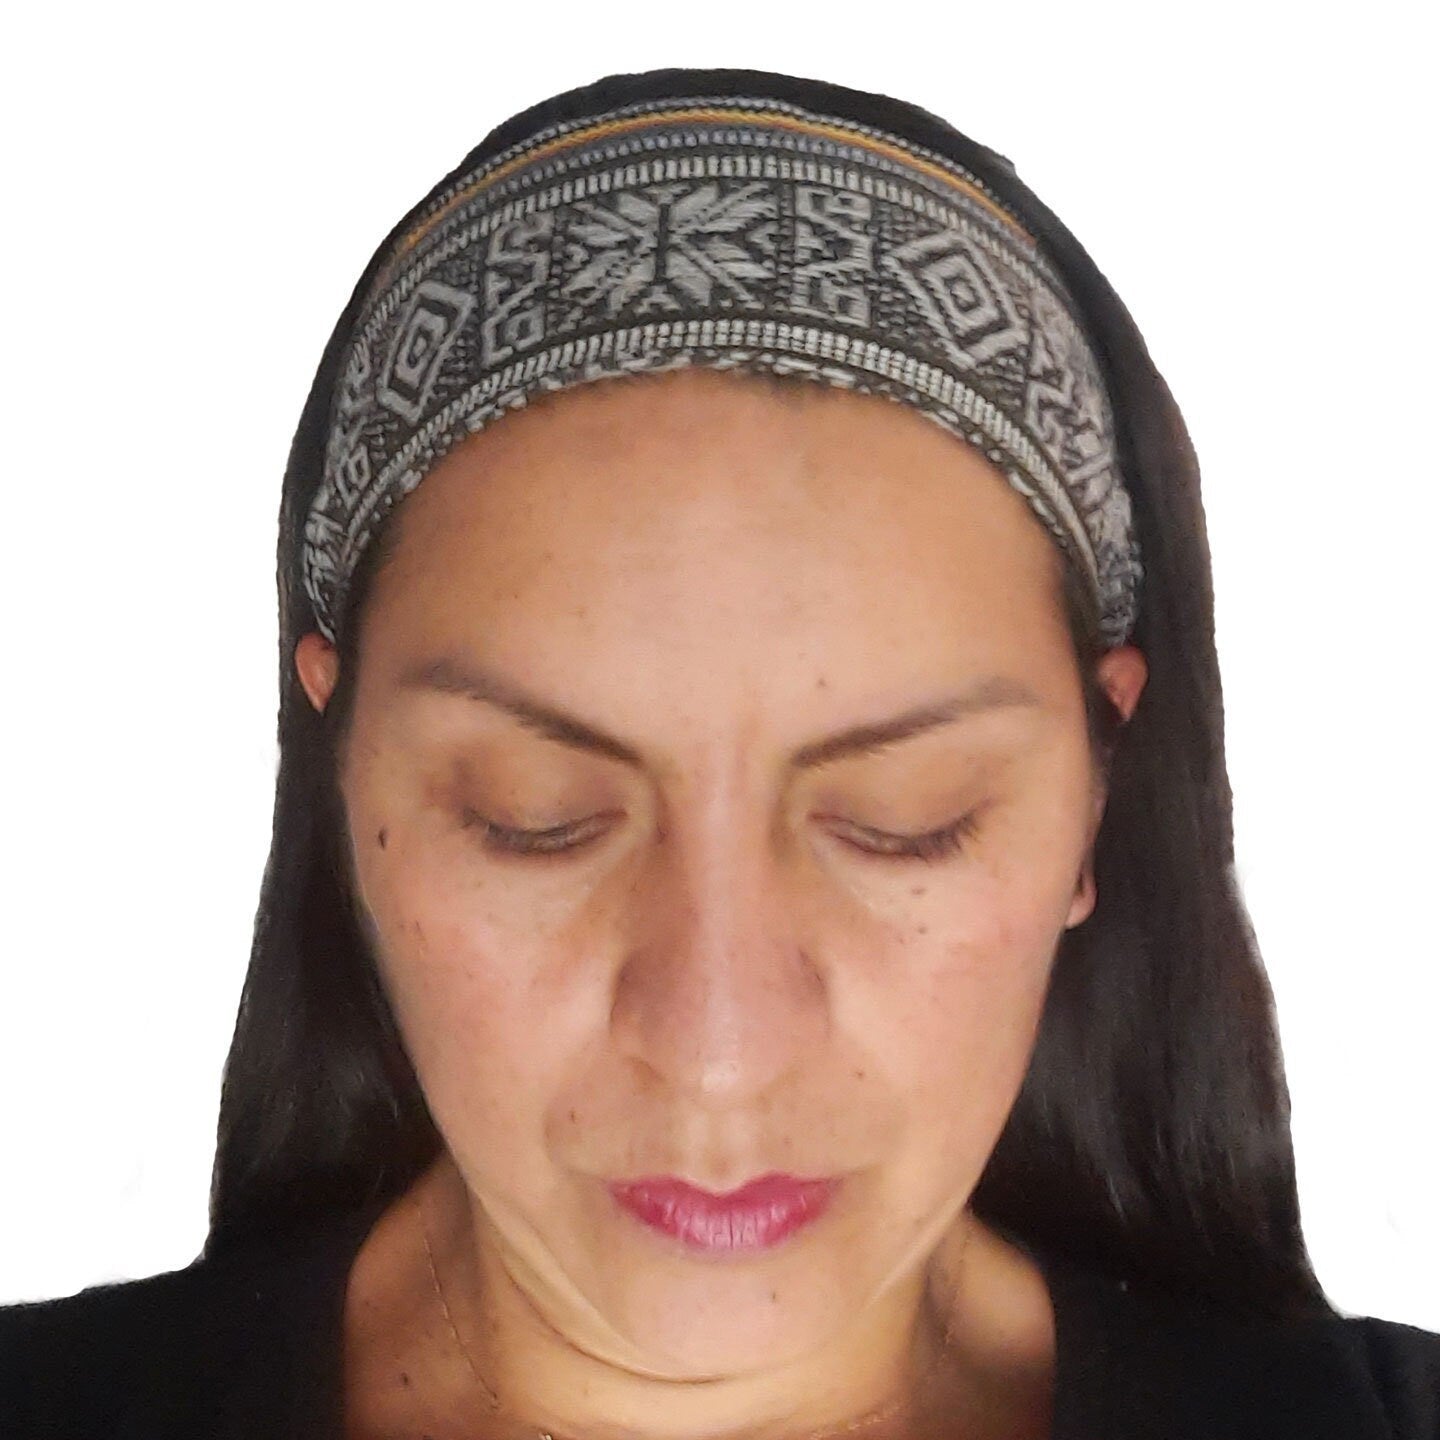 Narrow Skinny Hippie Headband for Men and Women